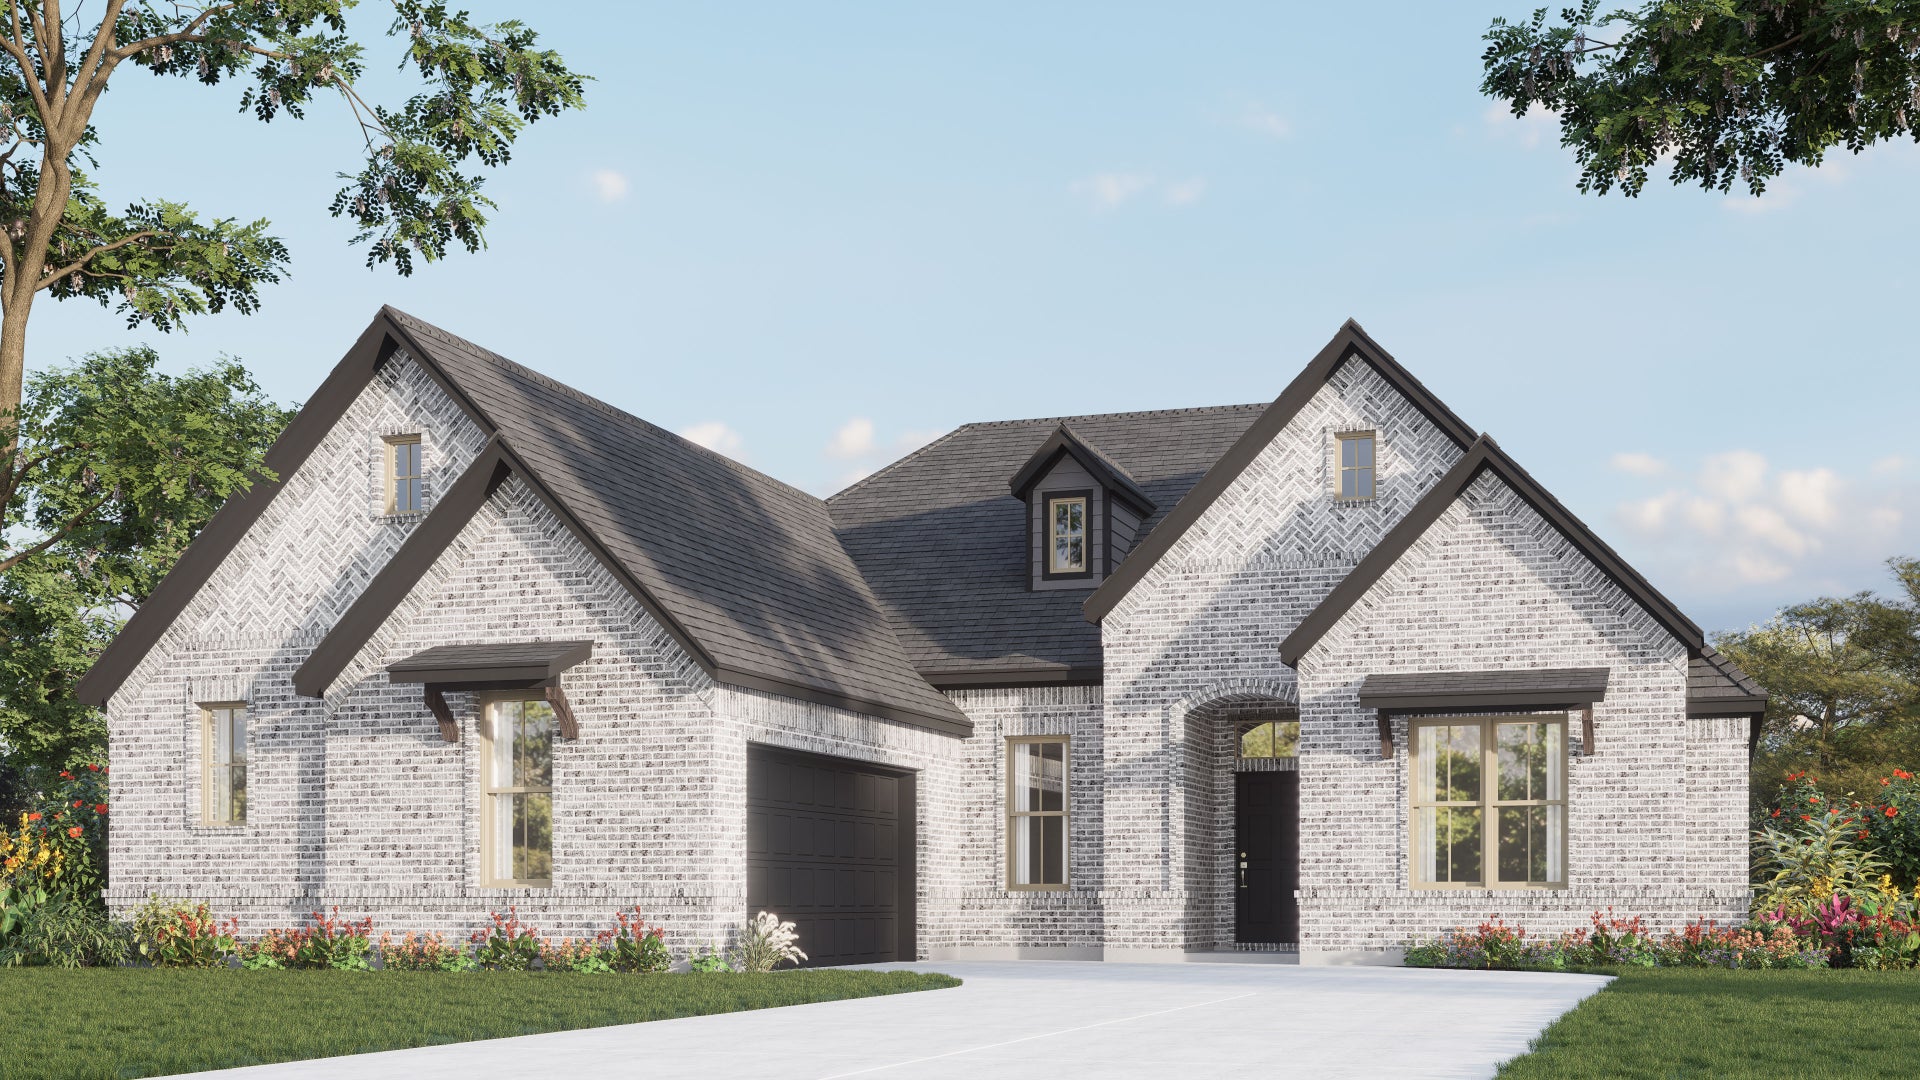 2050 C. 3br New Home in Granbury, TX